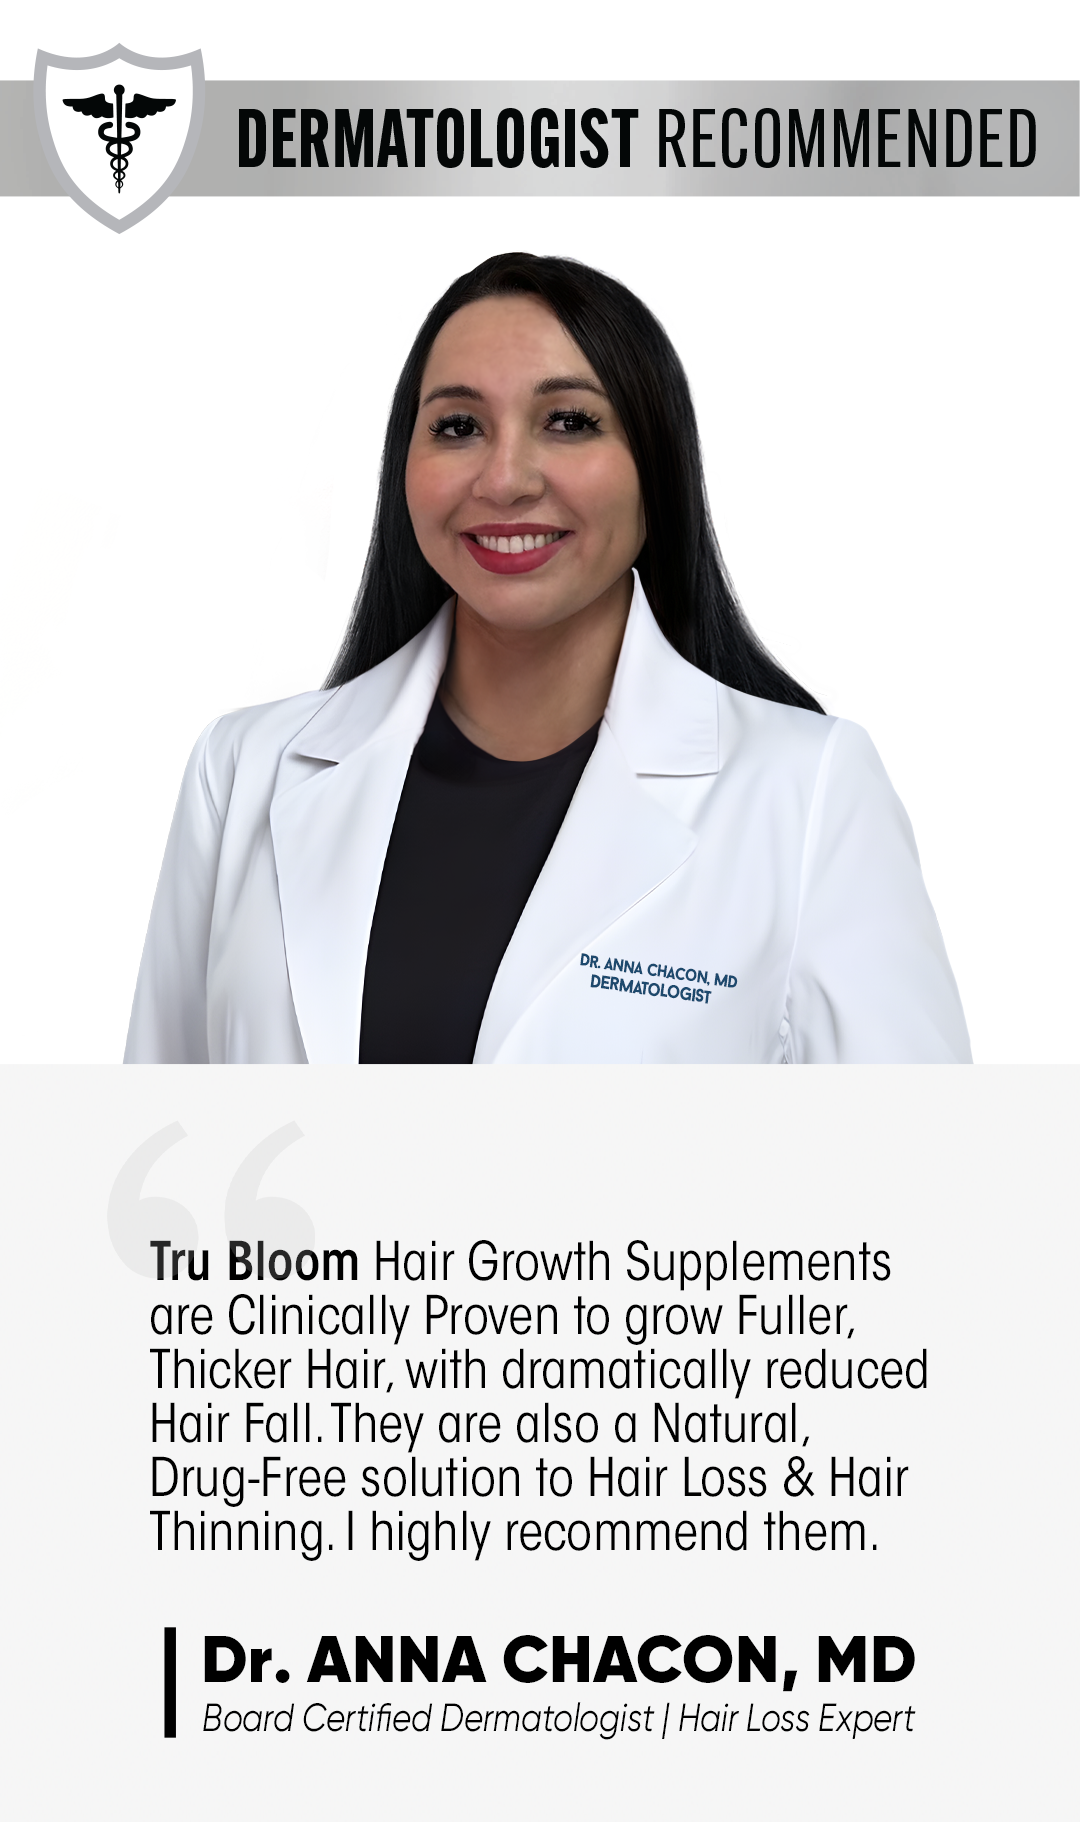 
  
  ST. TROPICA Hair Growth Vitamins - 1 Month Supply
  
